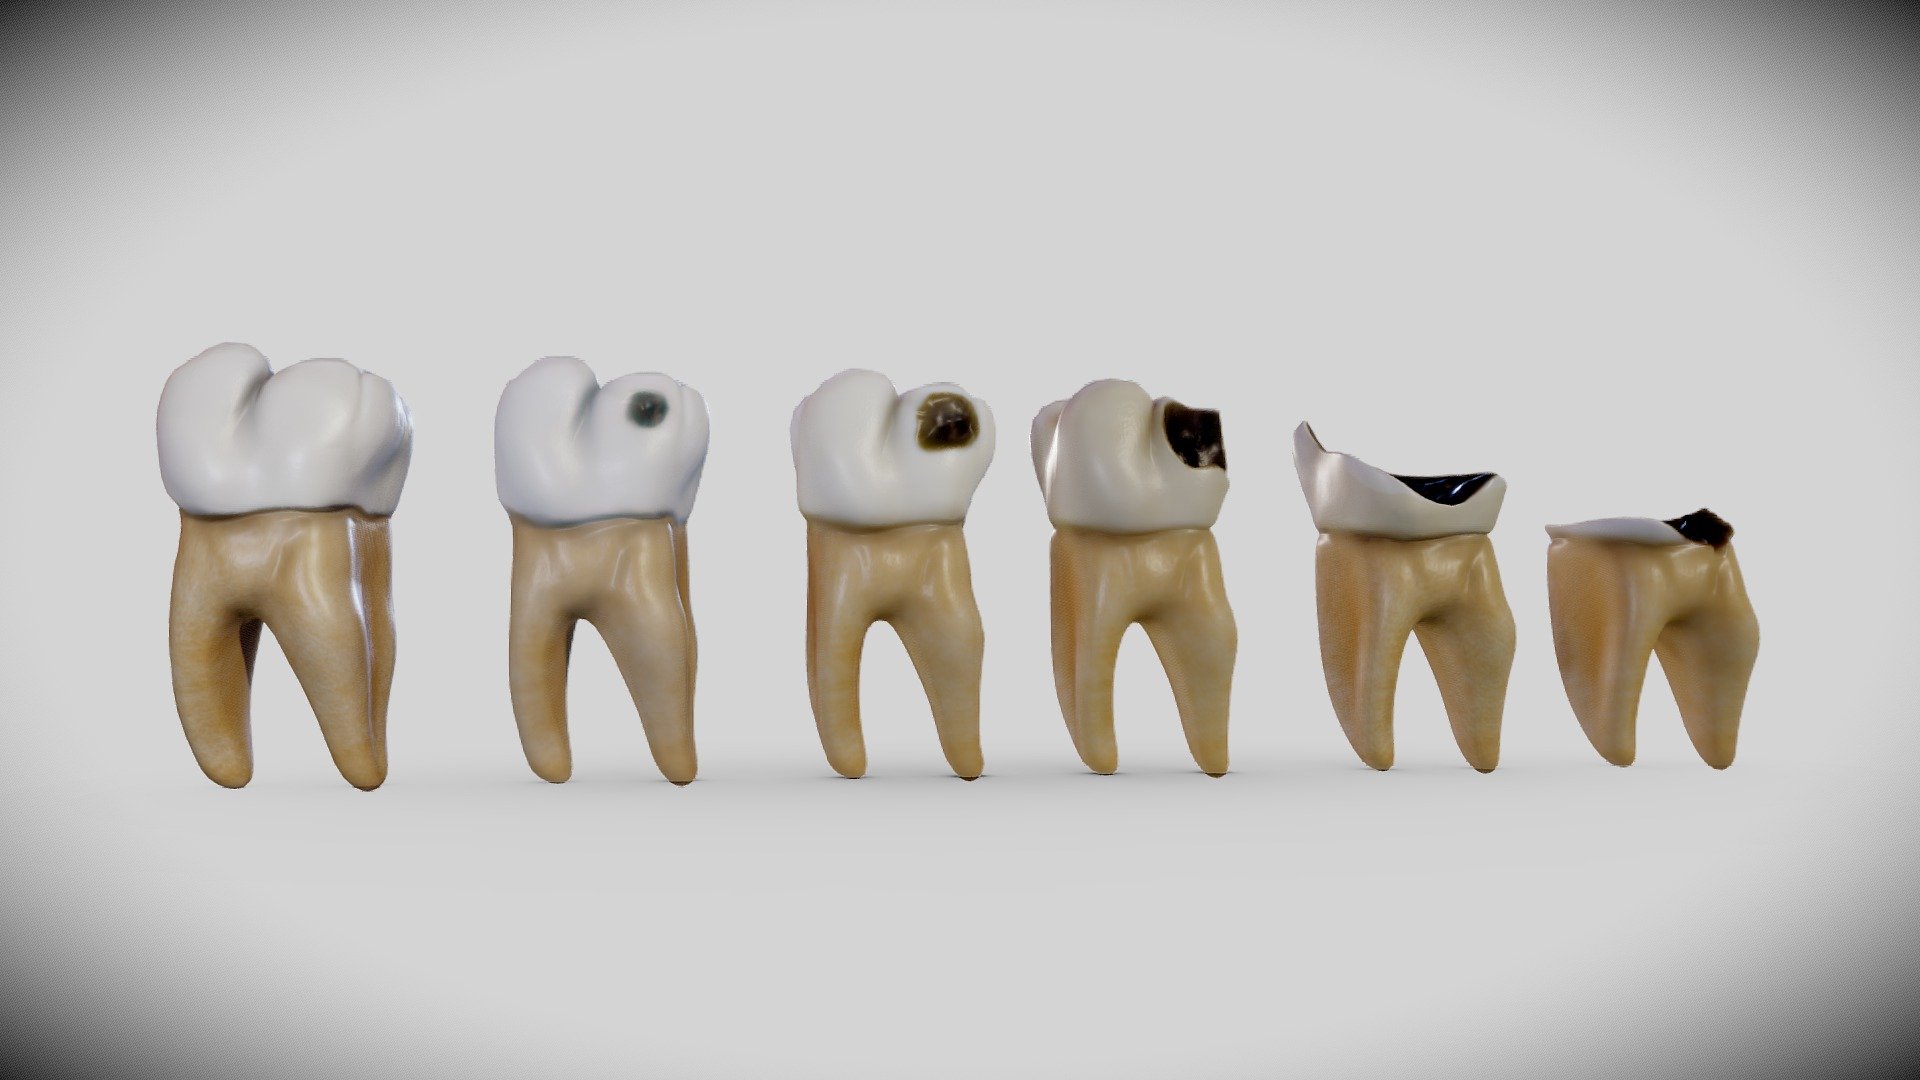 dental caries progression